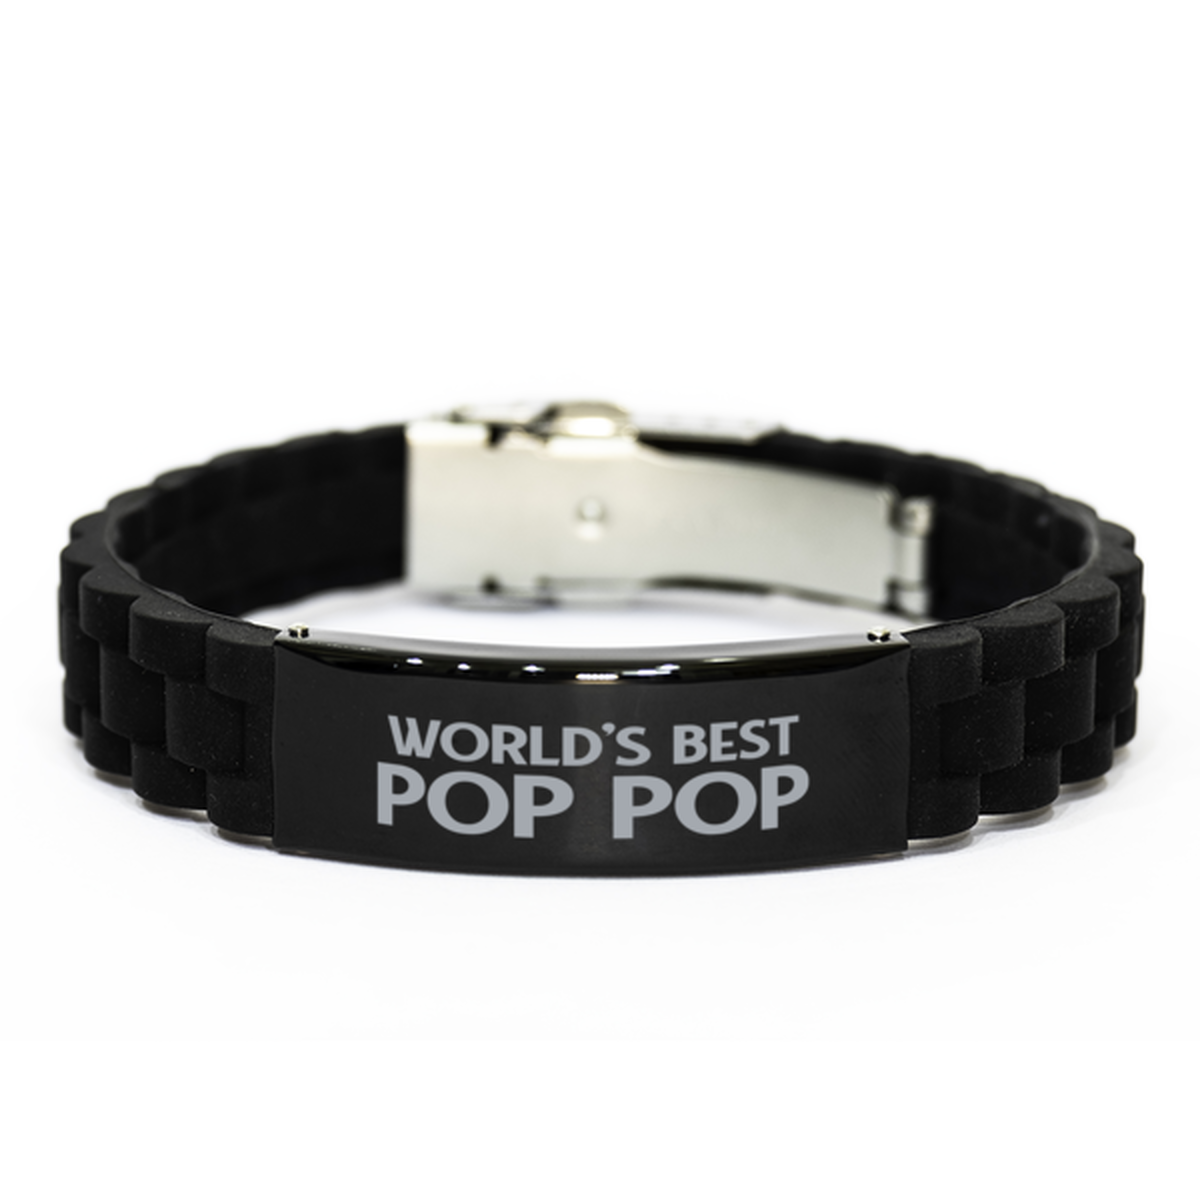 World's Best Pop Pop Gifts, Funny Black Engraved Bracelet For Pop Pop, Family Gifts For Men